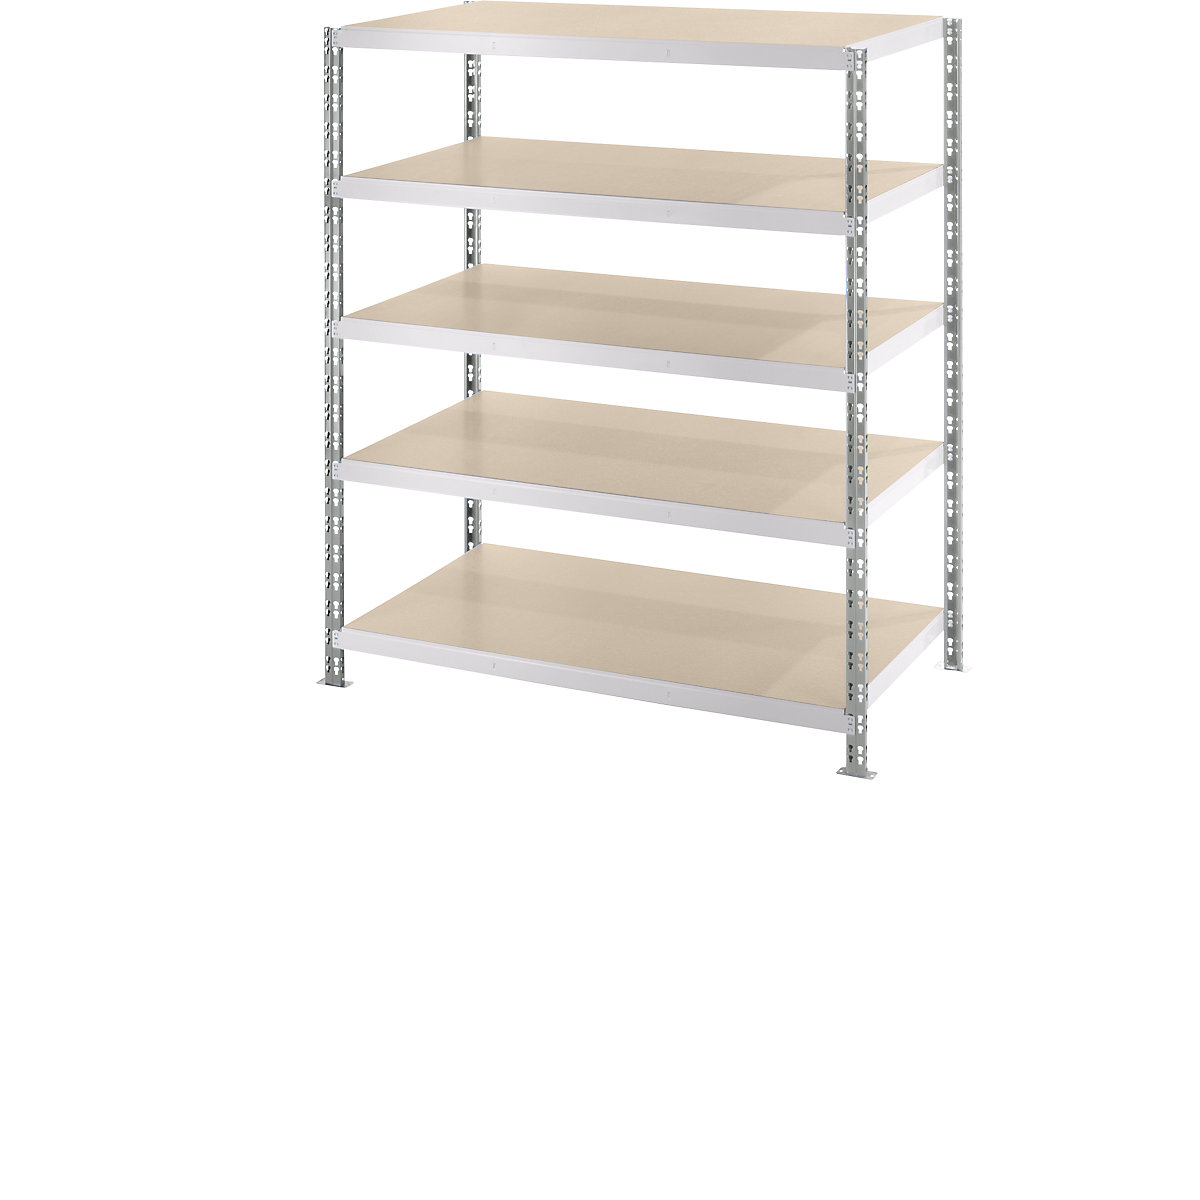 Wide span boltless shelf unit with moulded chipboard shelves, depth 800 mm, standard shelf unit, HxW 1820 x 1550 mm